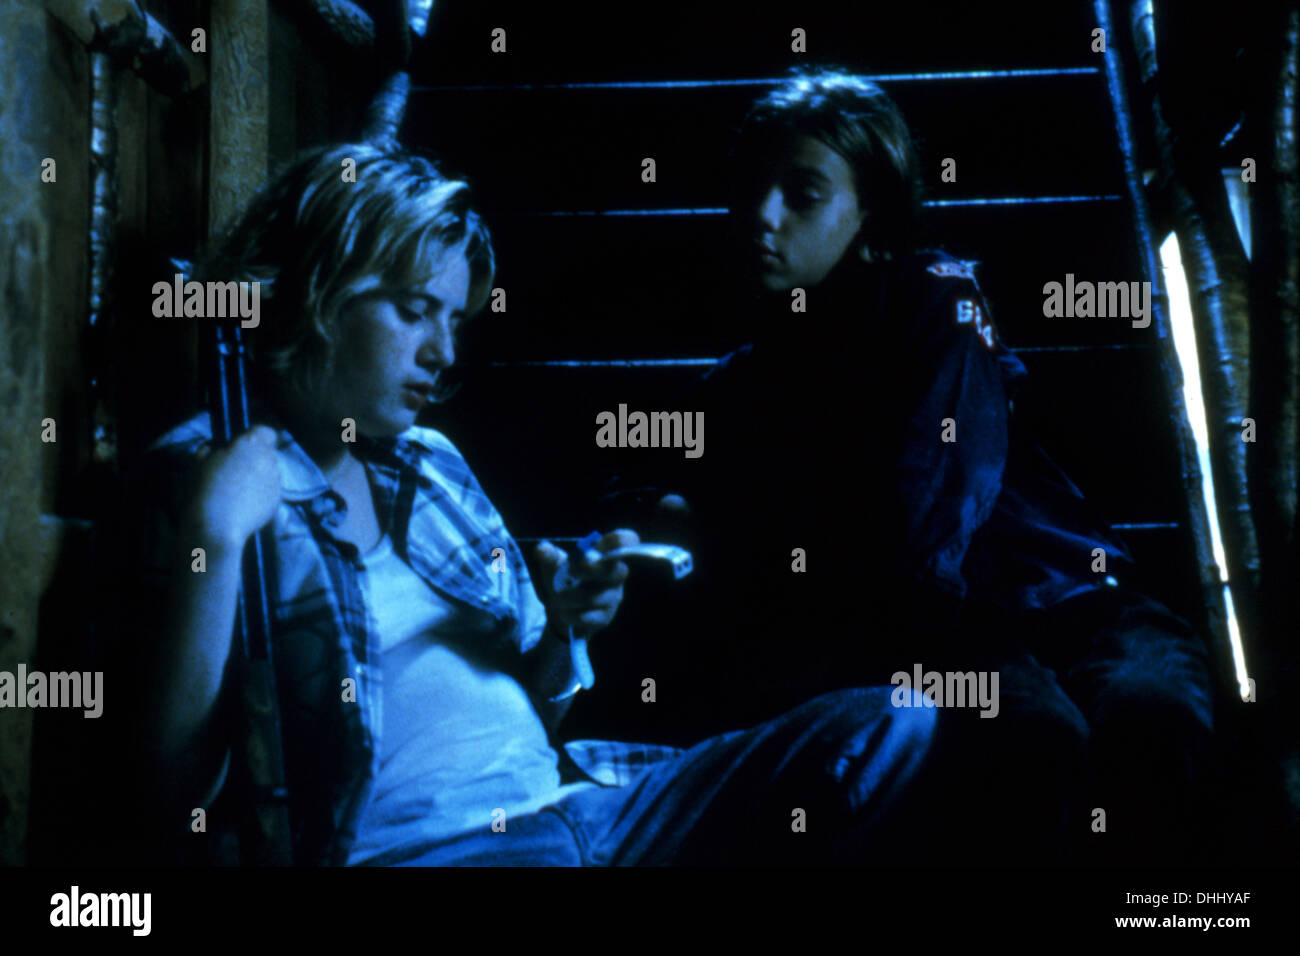 MANNY & LO (1996) MANNY E LO (ALT) ALEKSA PALLADINO, Scarlett Johansson, LISA KRUEGER (DIR) MANL 003 COLLEZIONE MOVIESTORE LTD Foto Stock